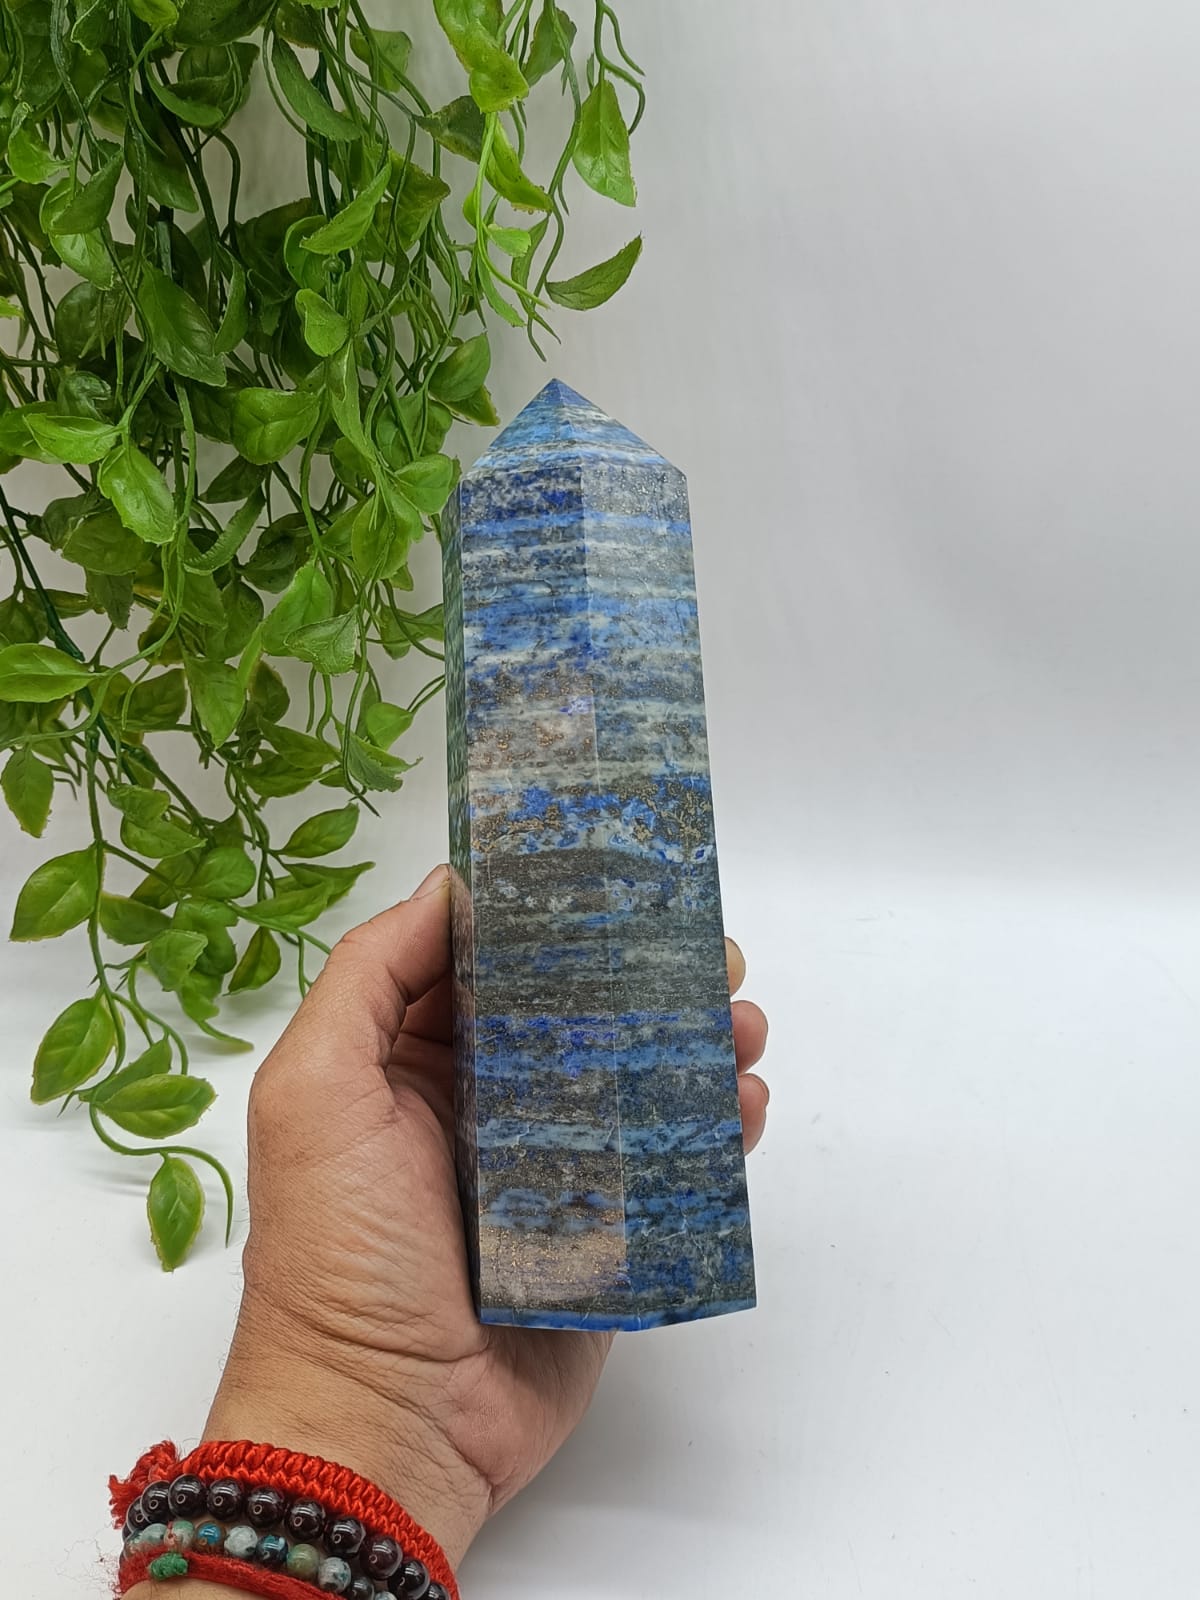 Lapis Lazuli Obelisk Shape Tower 1.38 Kg

